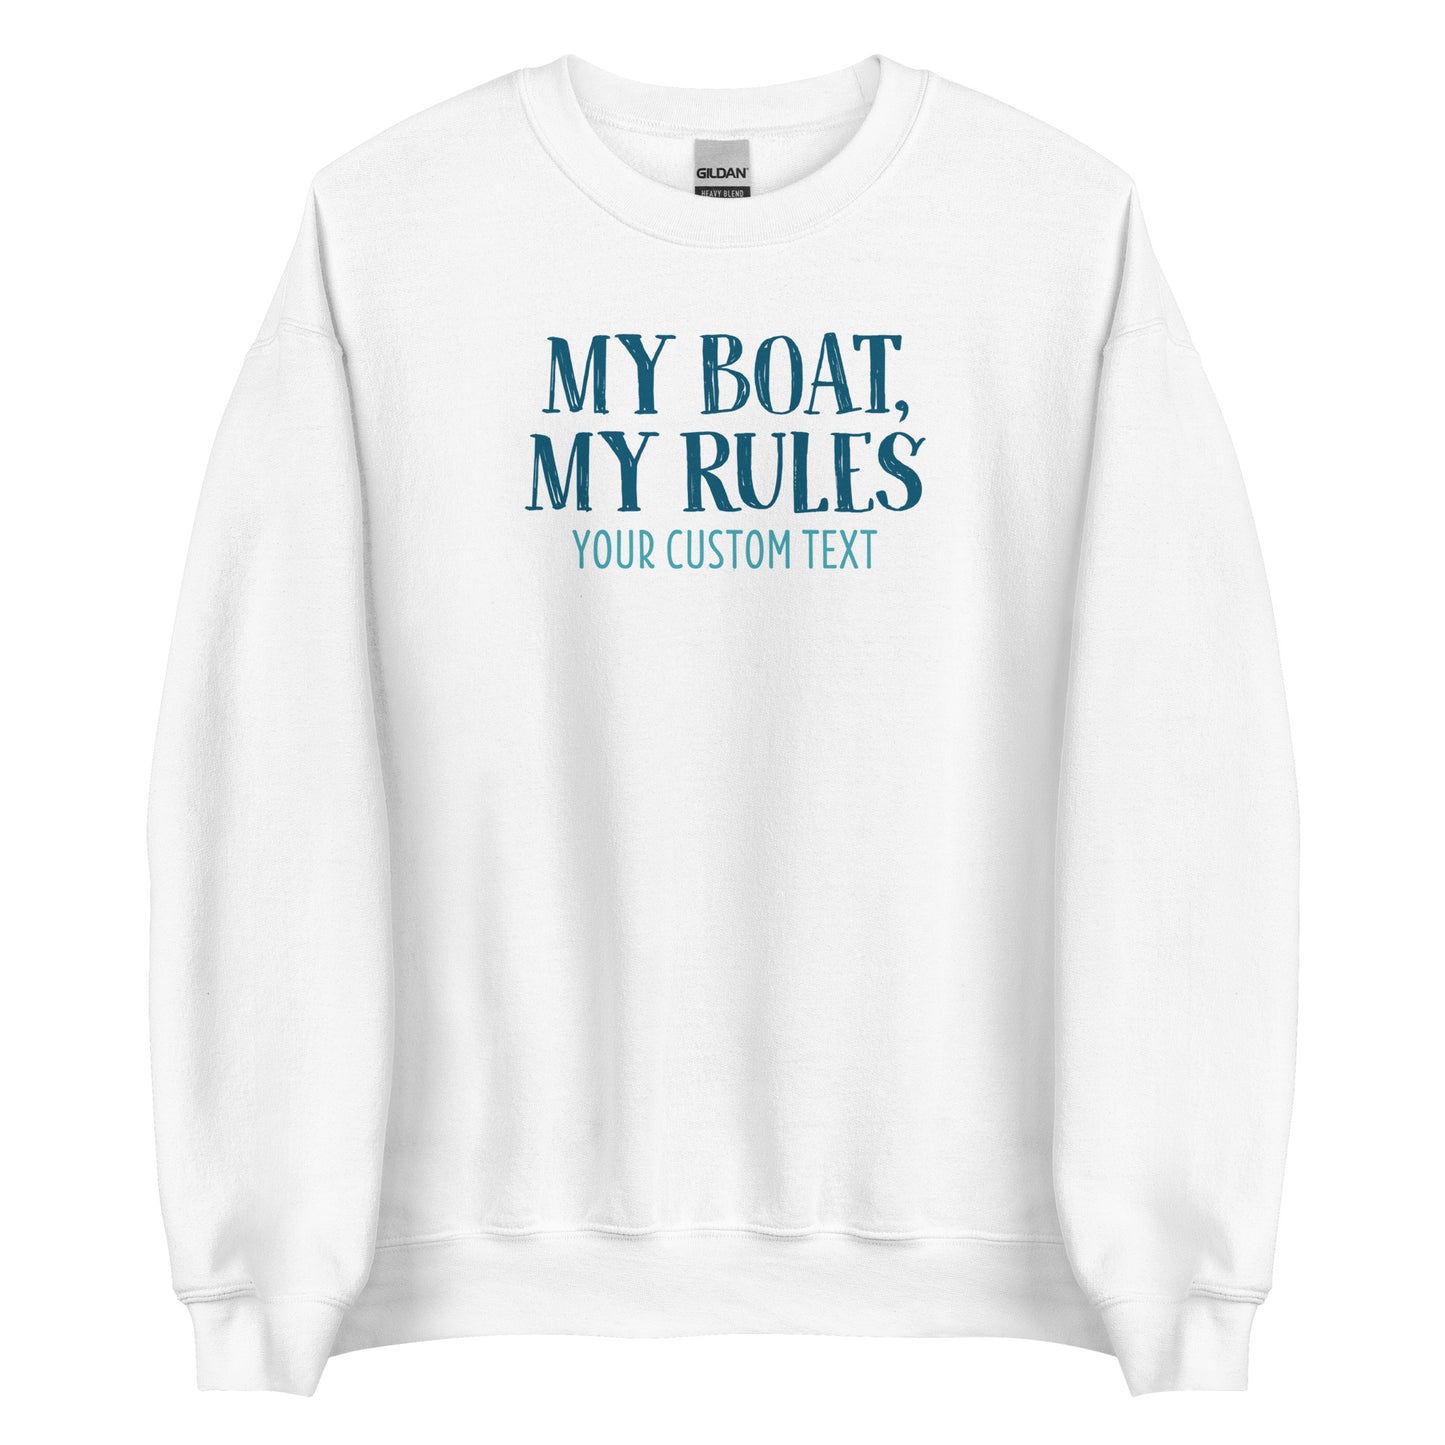 My Boat, My Rules - Smith Mountain Lake Unisex Crewneck Sweatshirt